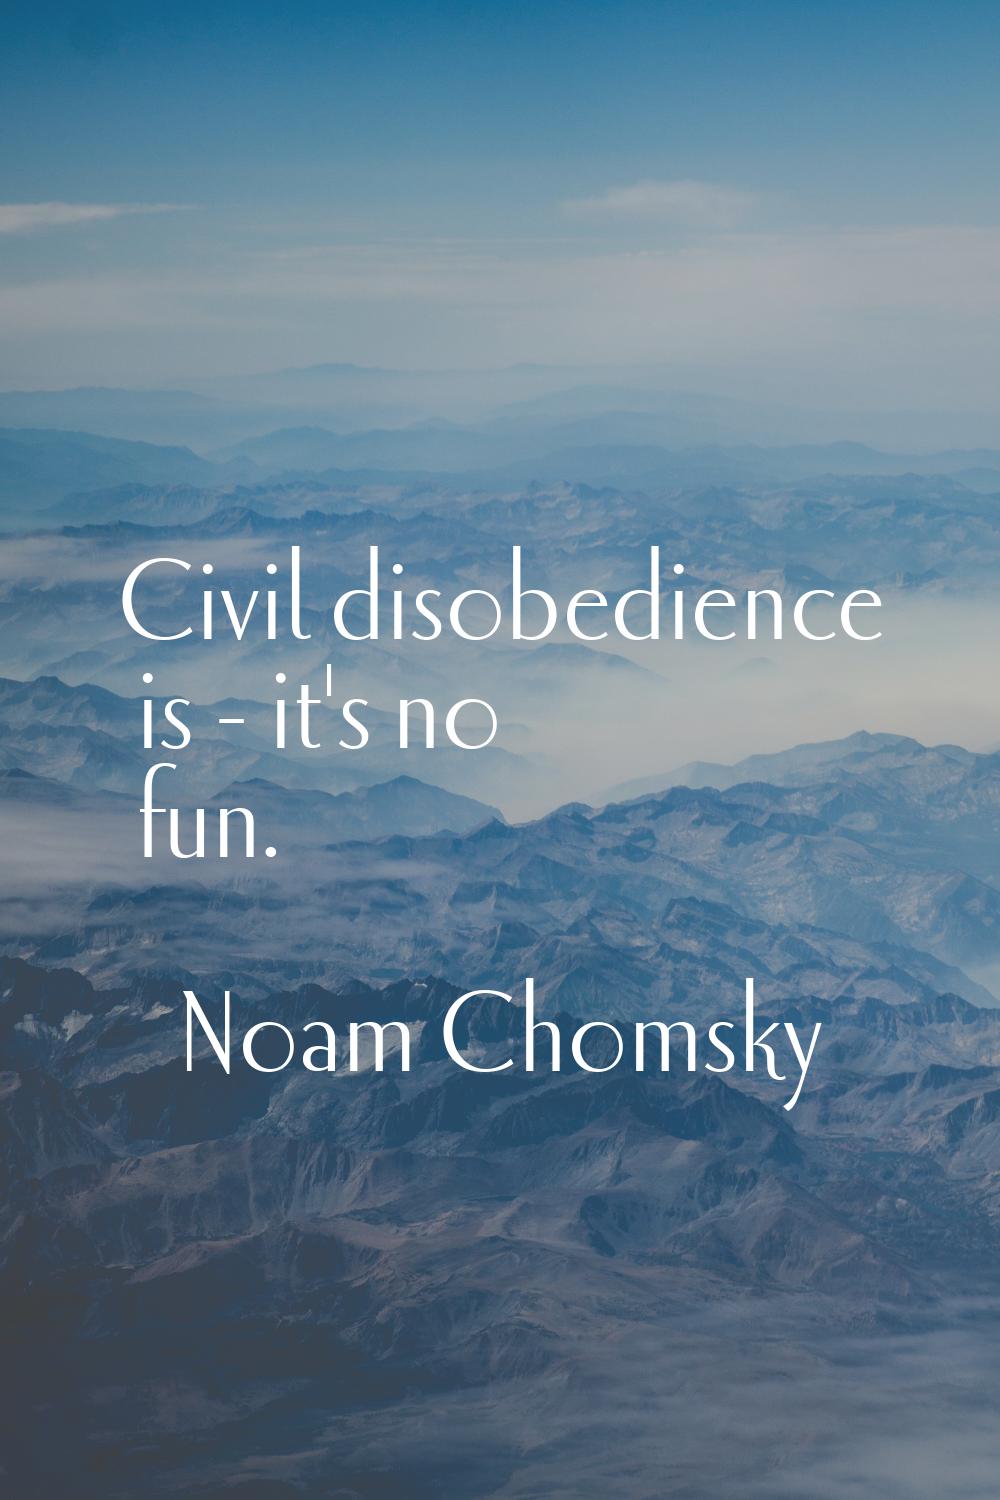 Civil disobedience is - it's no fun.